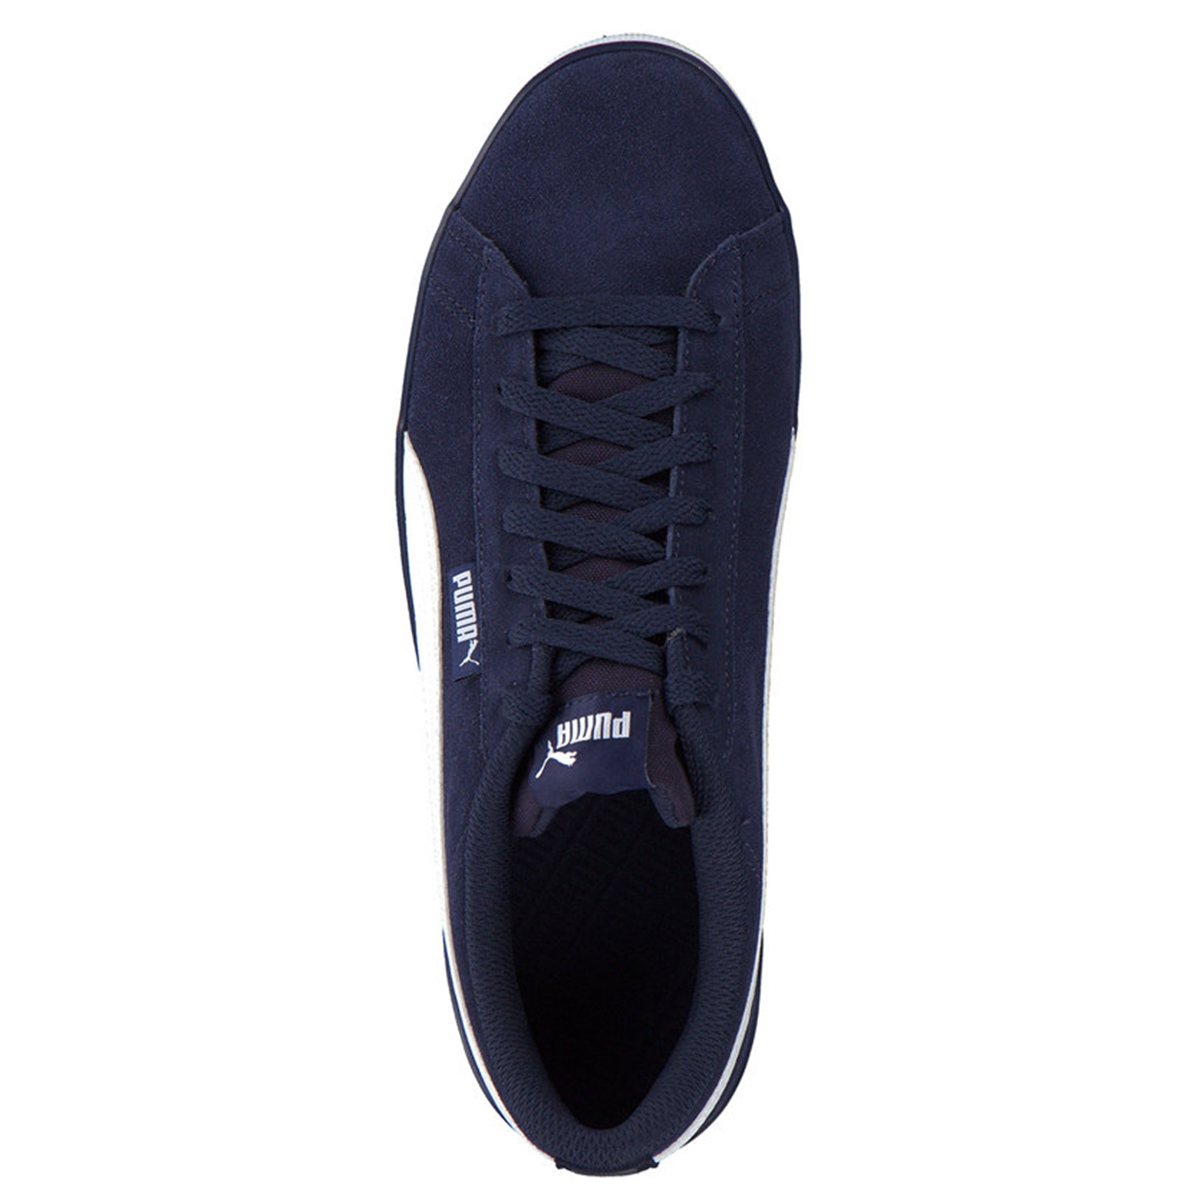 Puma Urban Plus SD Unisex Sneaker Schuh blau 365259 03